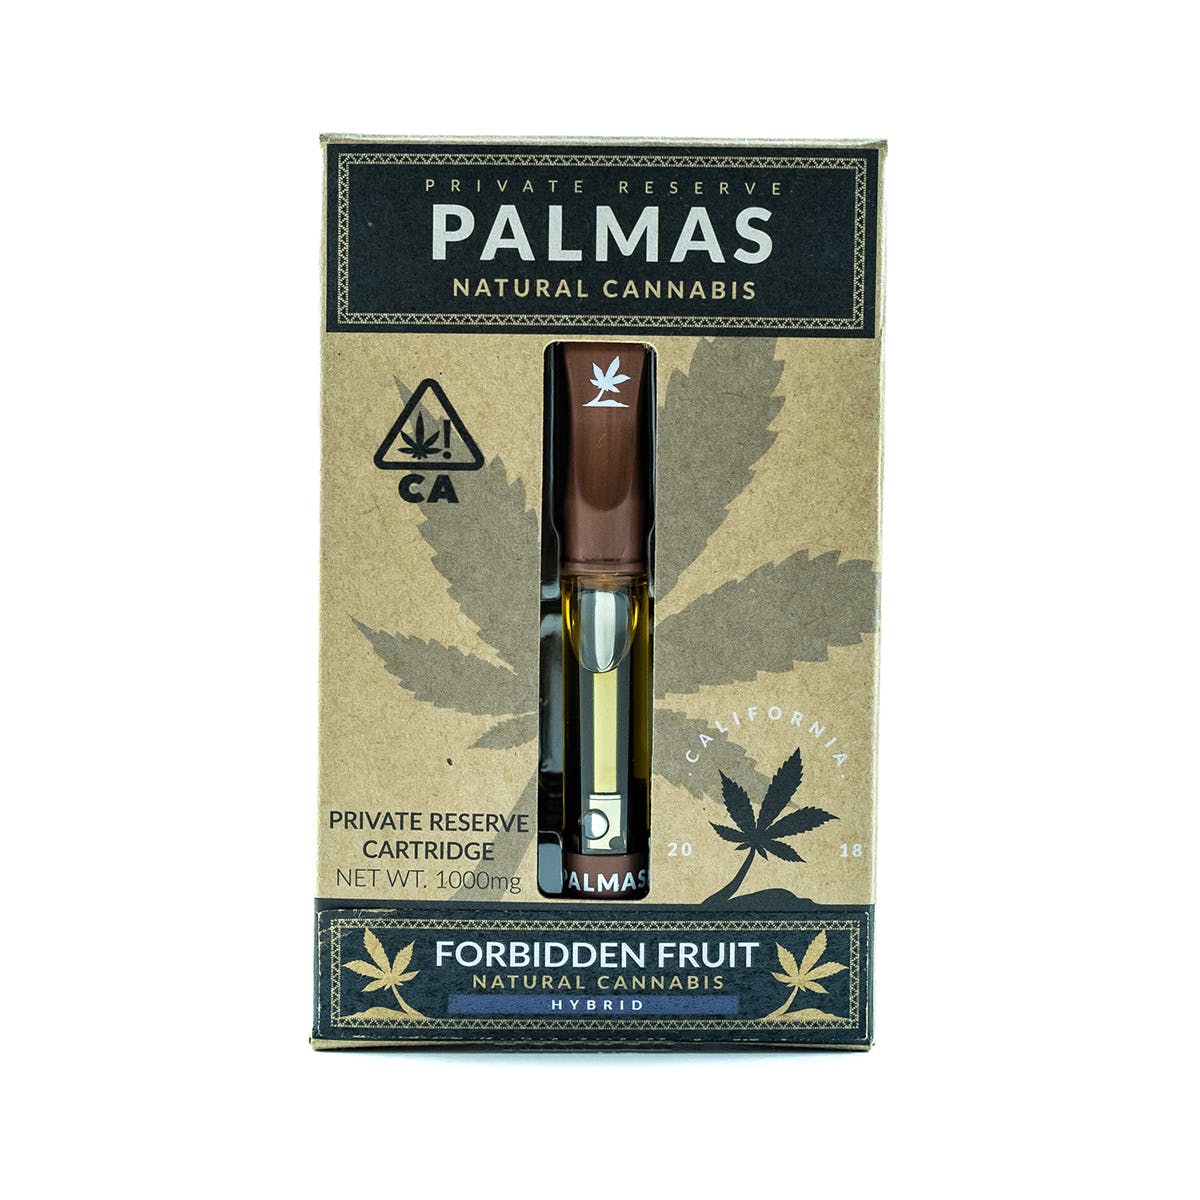 marijuana-dispensaries-firestone-20-cap-in-los-angeles-palmas-private-reserve-cartridge-forbidden-fruit